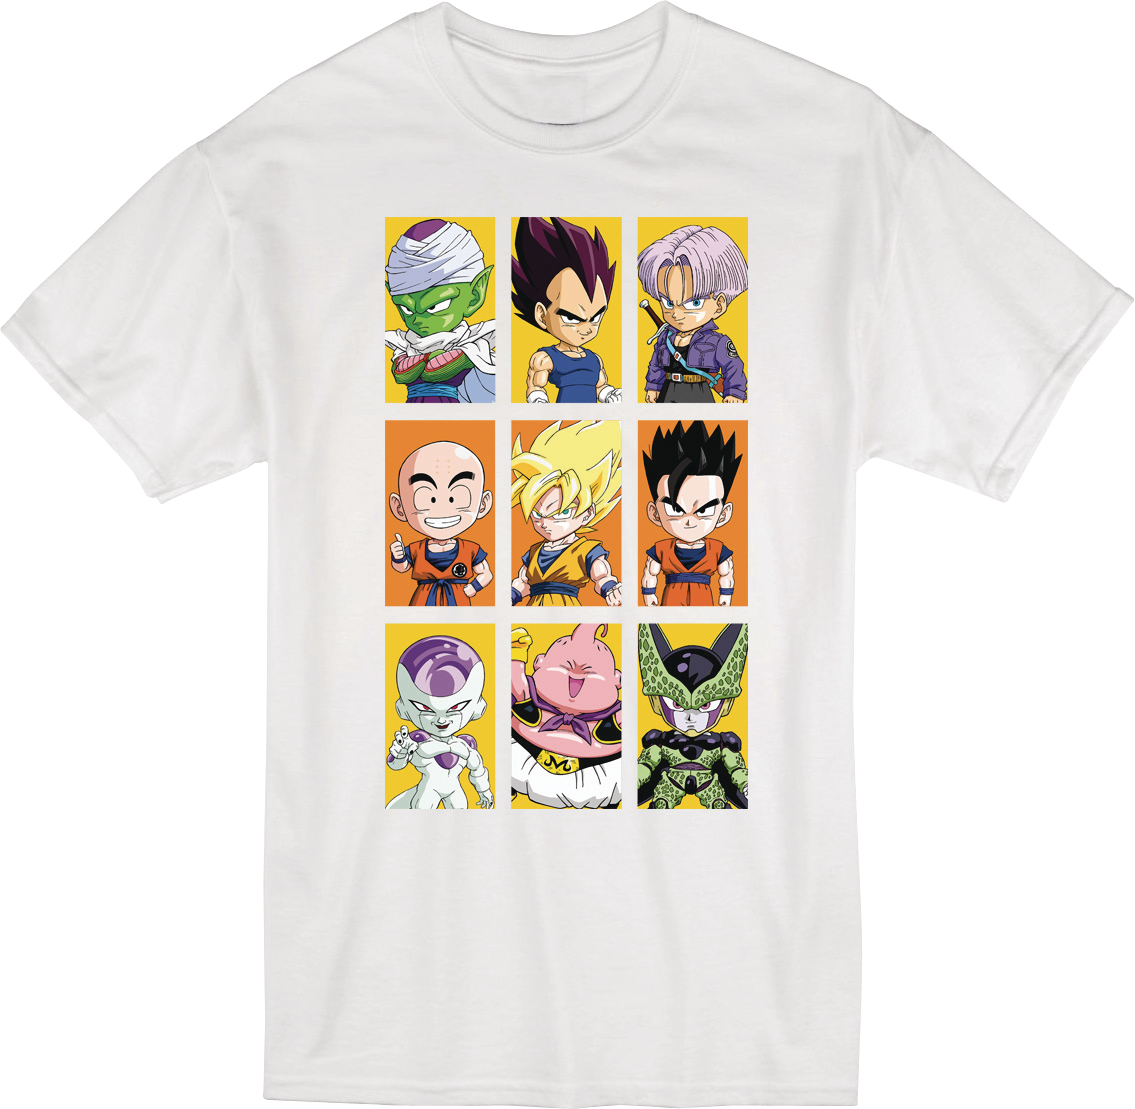 Dragon Ball Z Chibi Cast T-Shirt Large